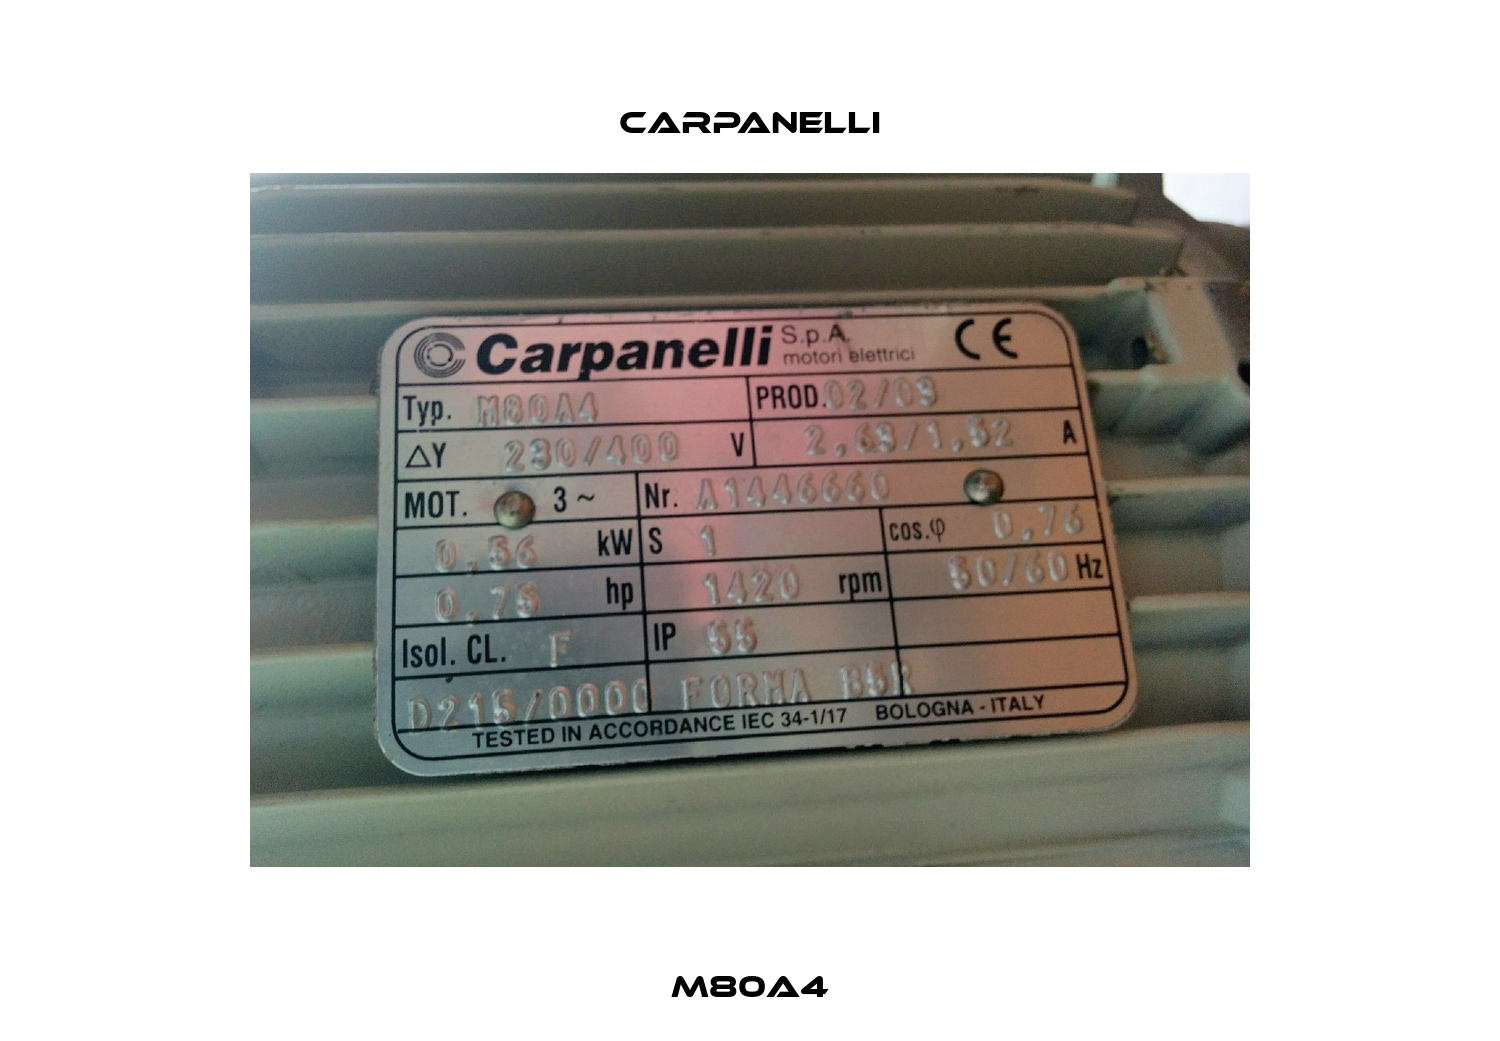 M80a4 Carpanelli